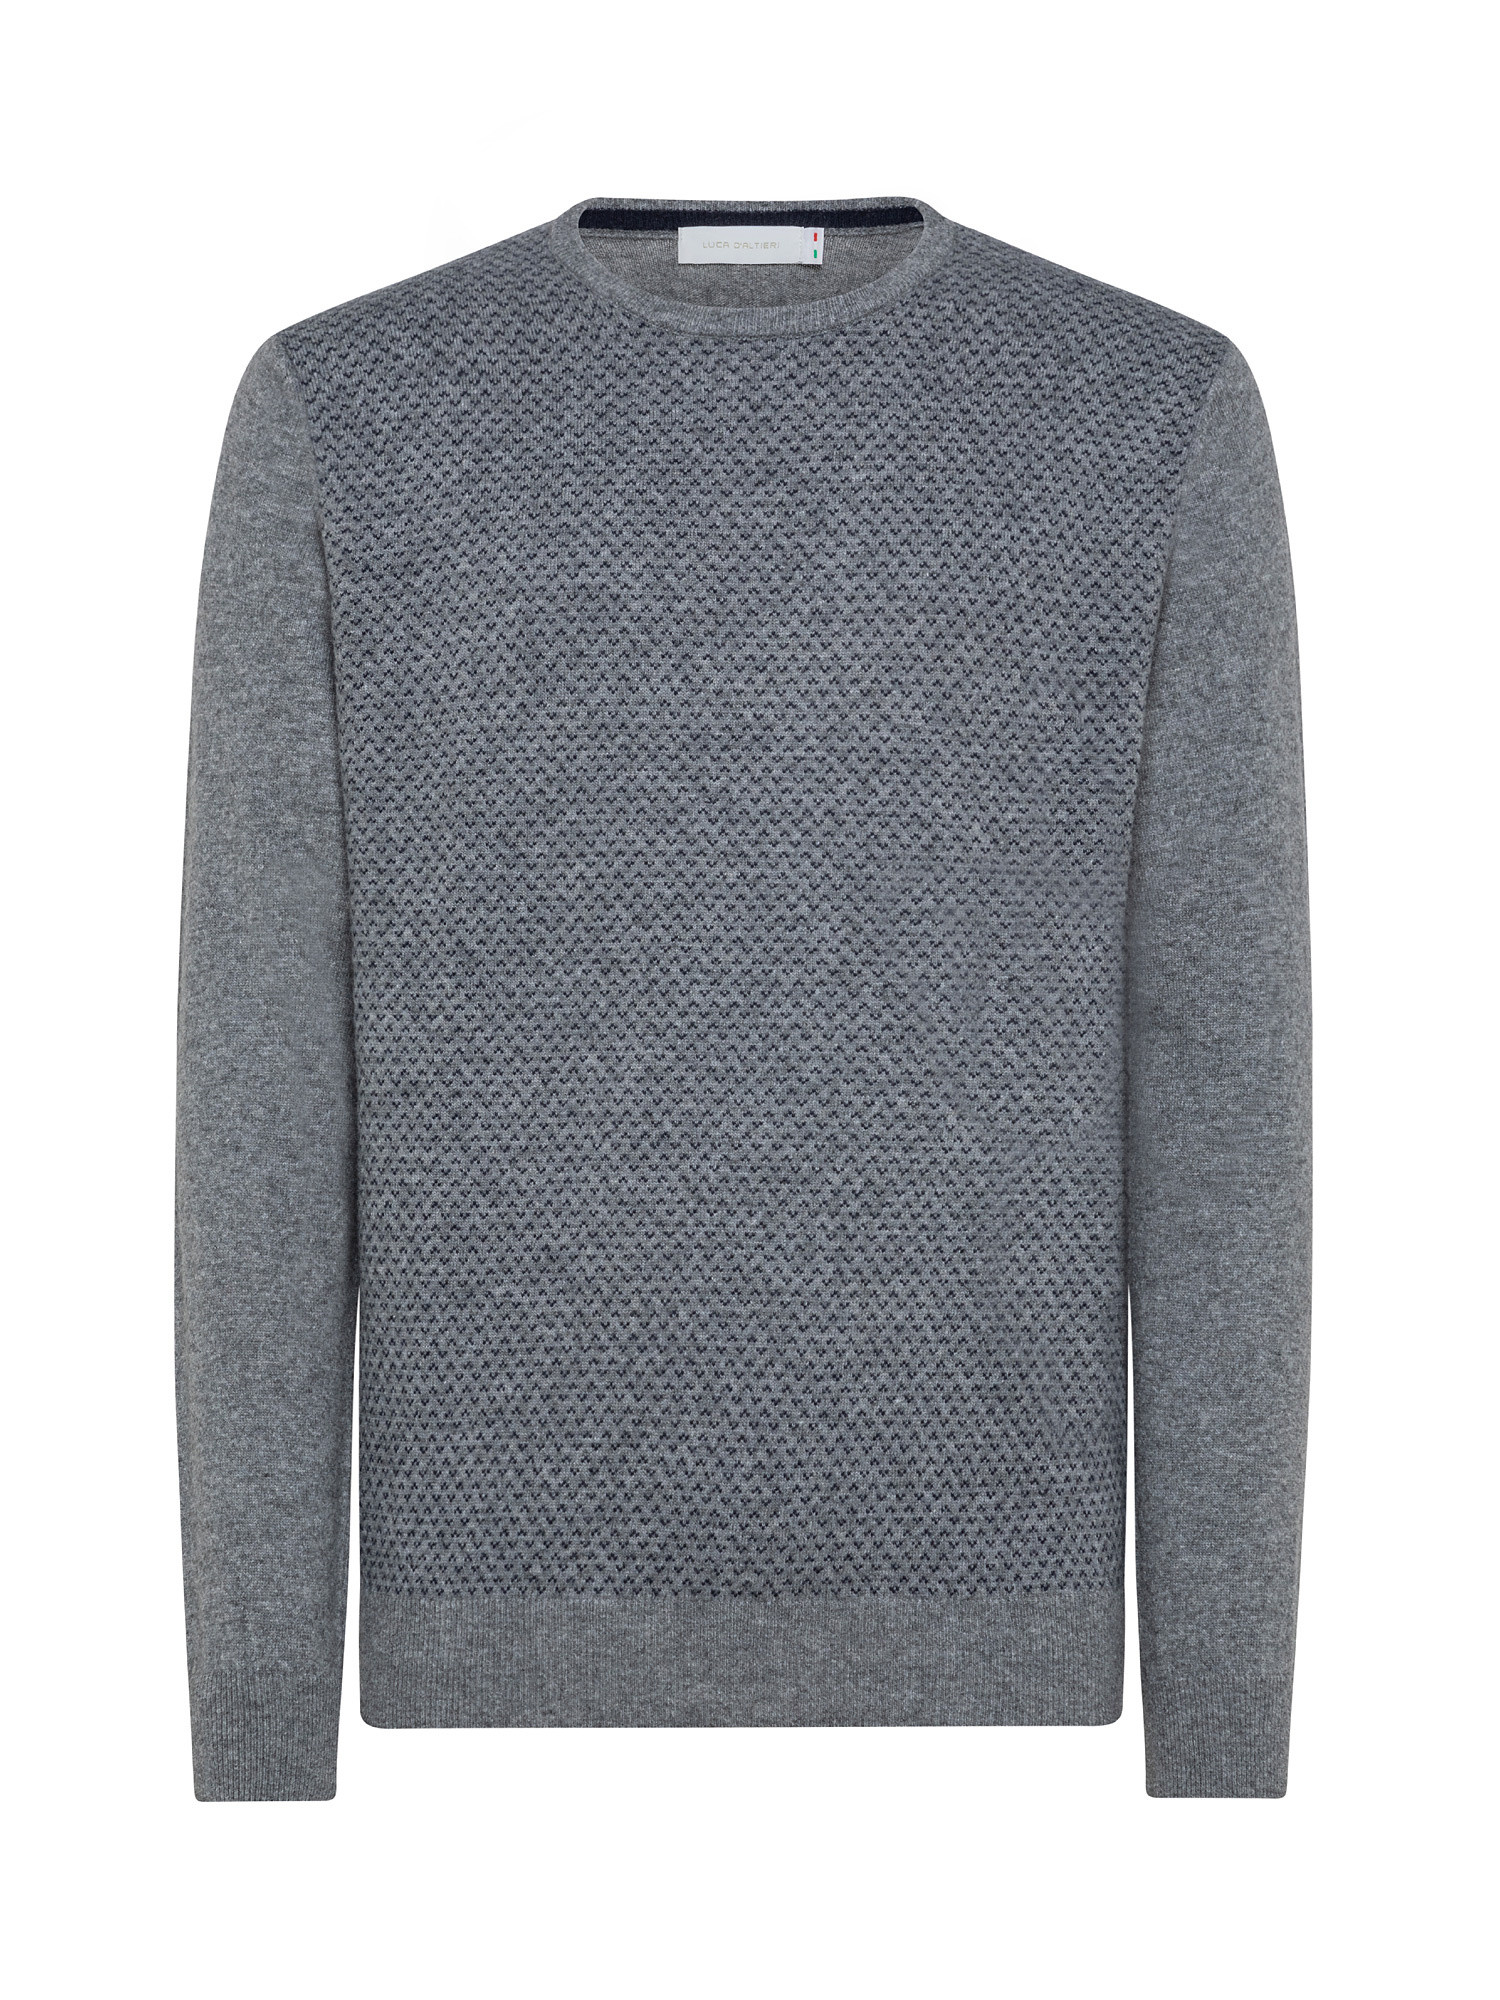 Basic crewneck pullover, Grey, large image number 0